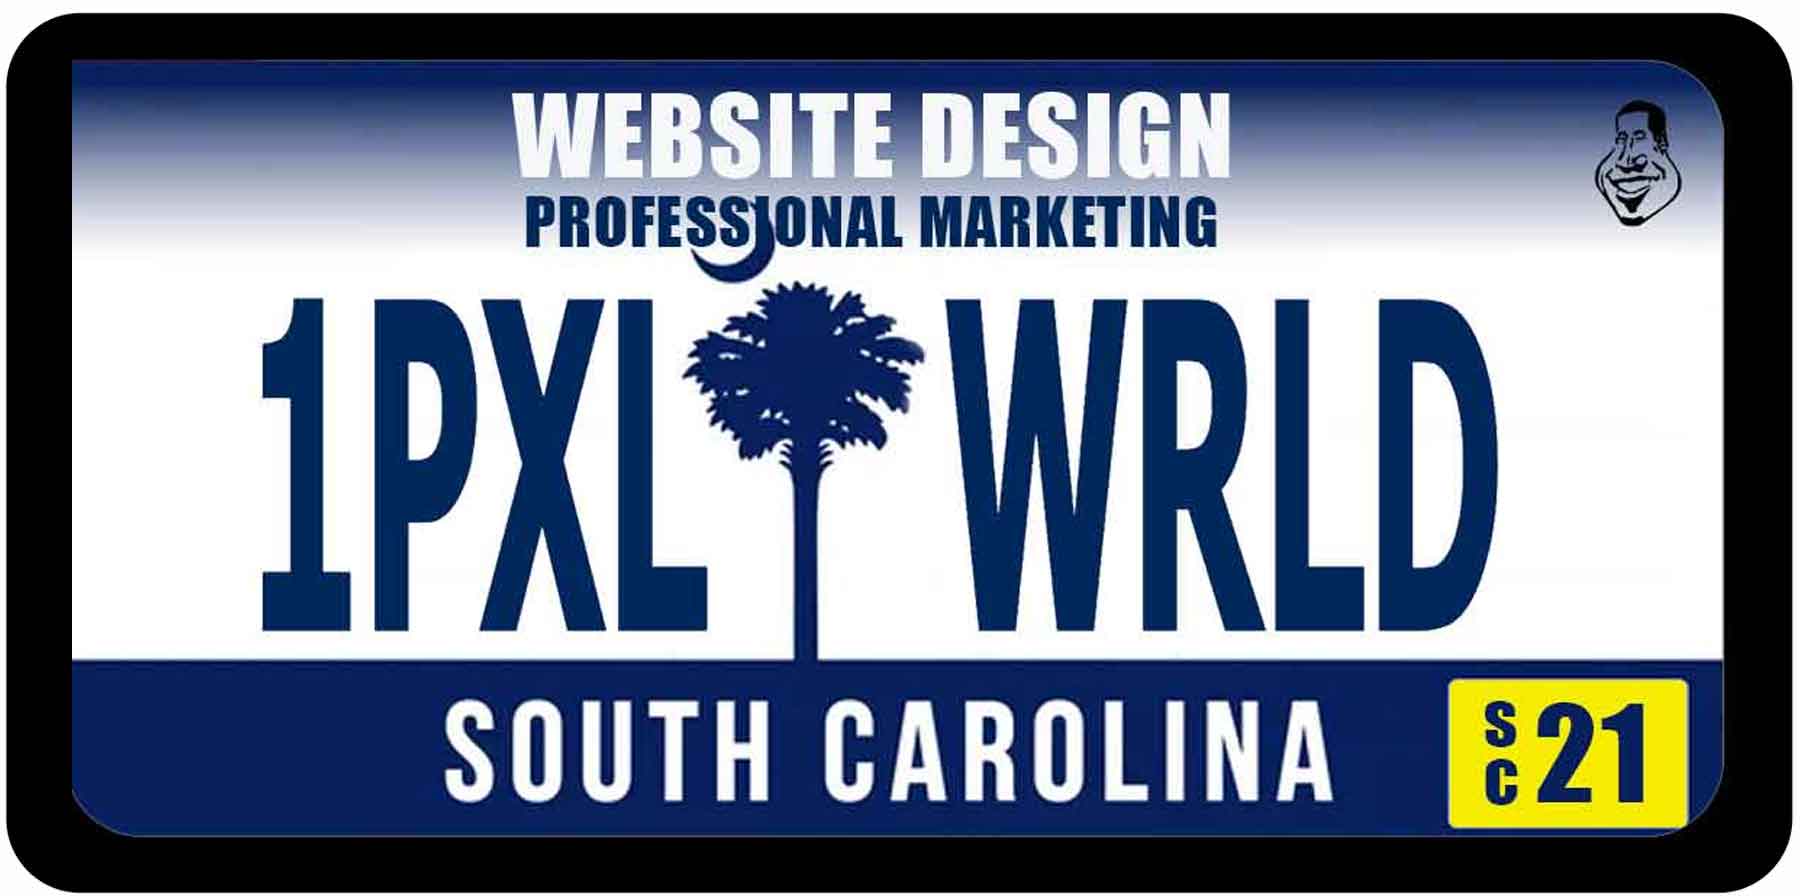 Professional Website Design in South Carolina